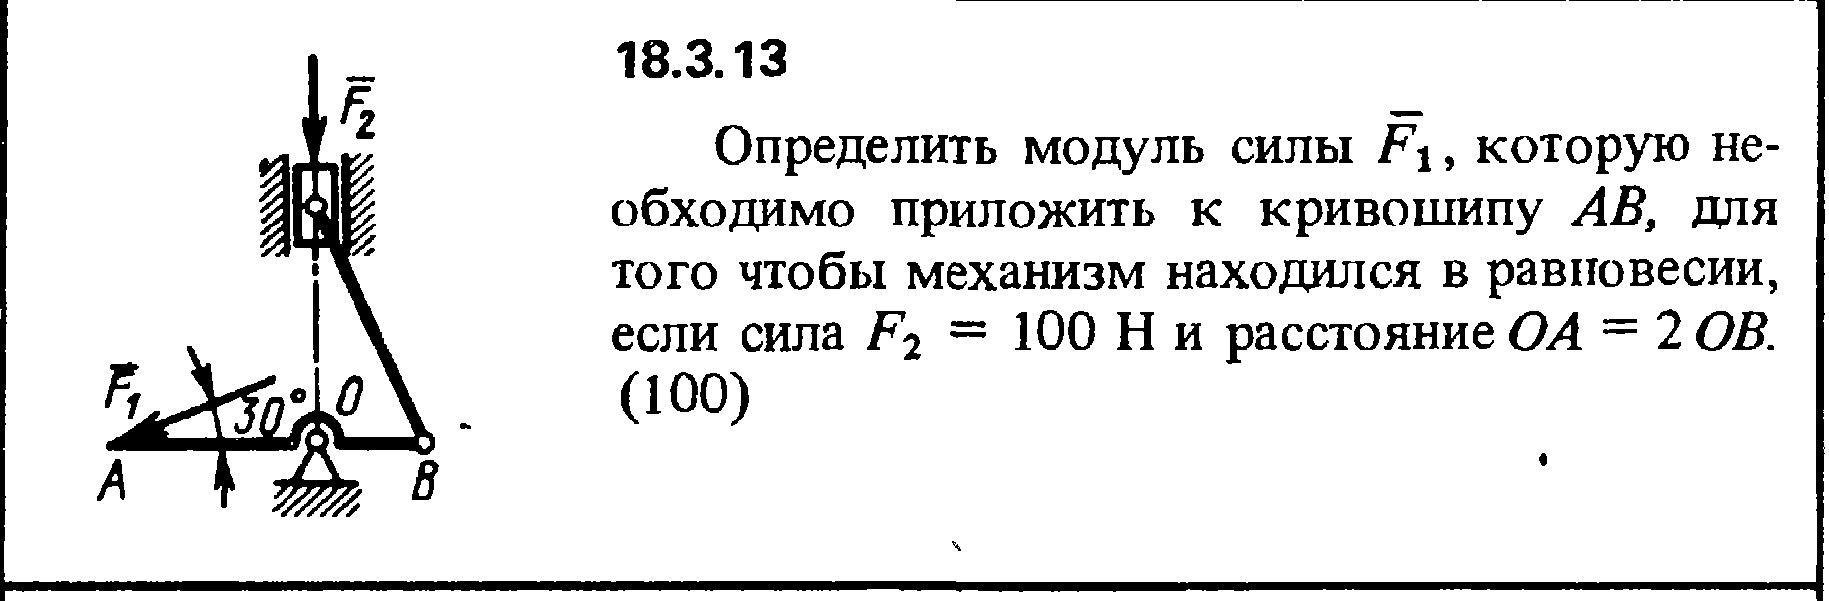 Решение 18.3.13 из сборника (решебника) Кепе О.Е. 1989